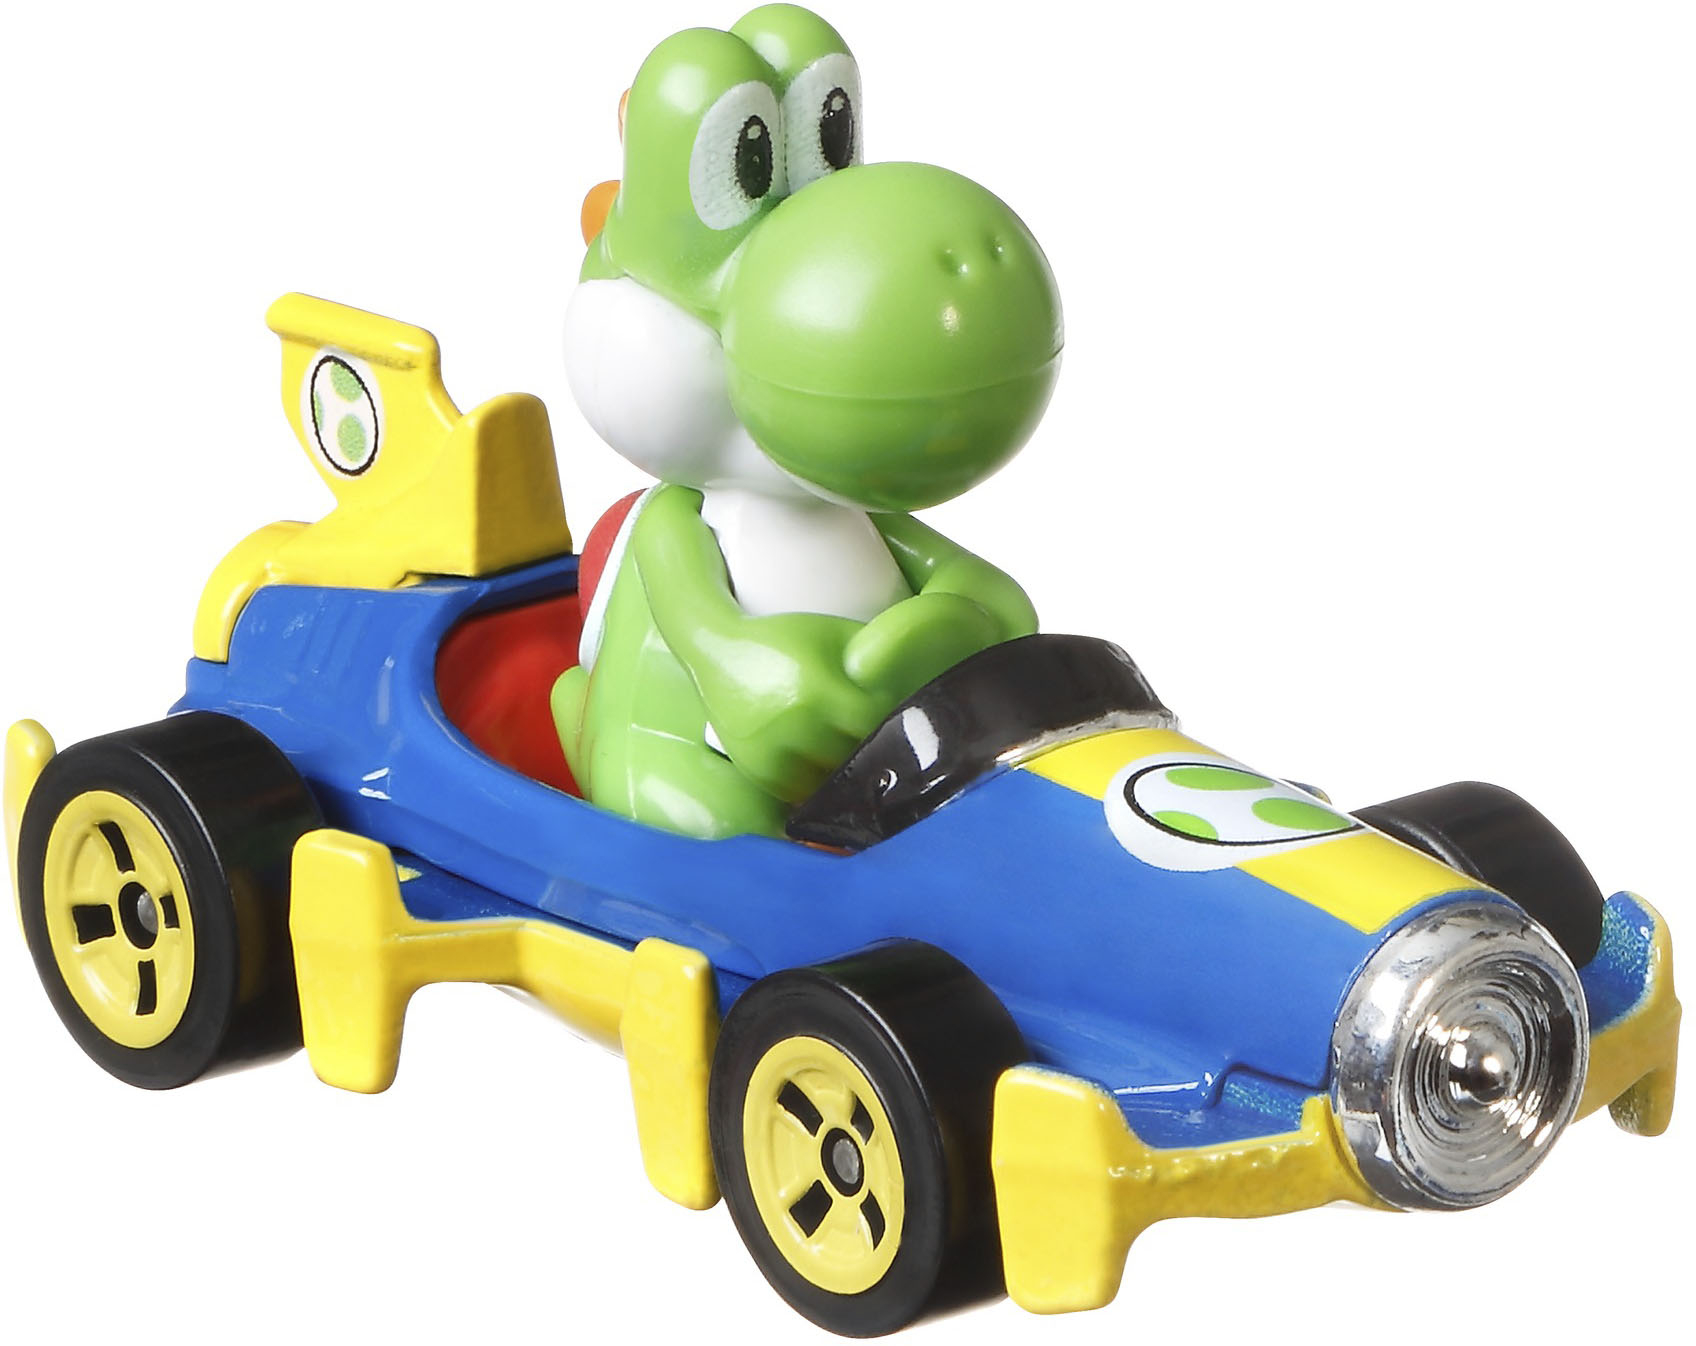 Hot Wheels Mario Kart Circuit Track Set with 1:64 Scale Die-Cast Kart  Replica